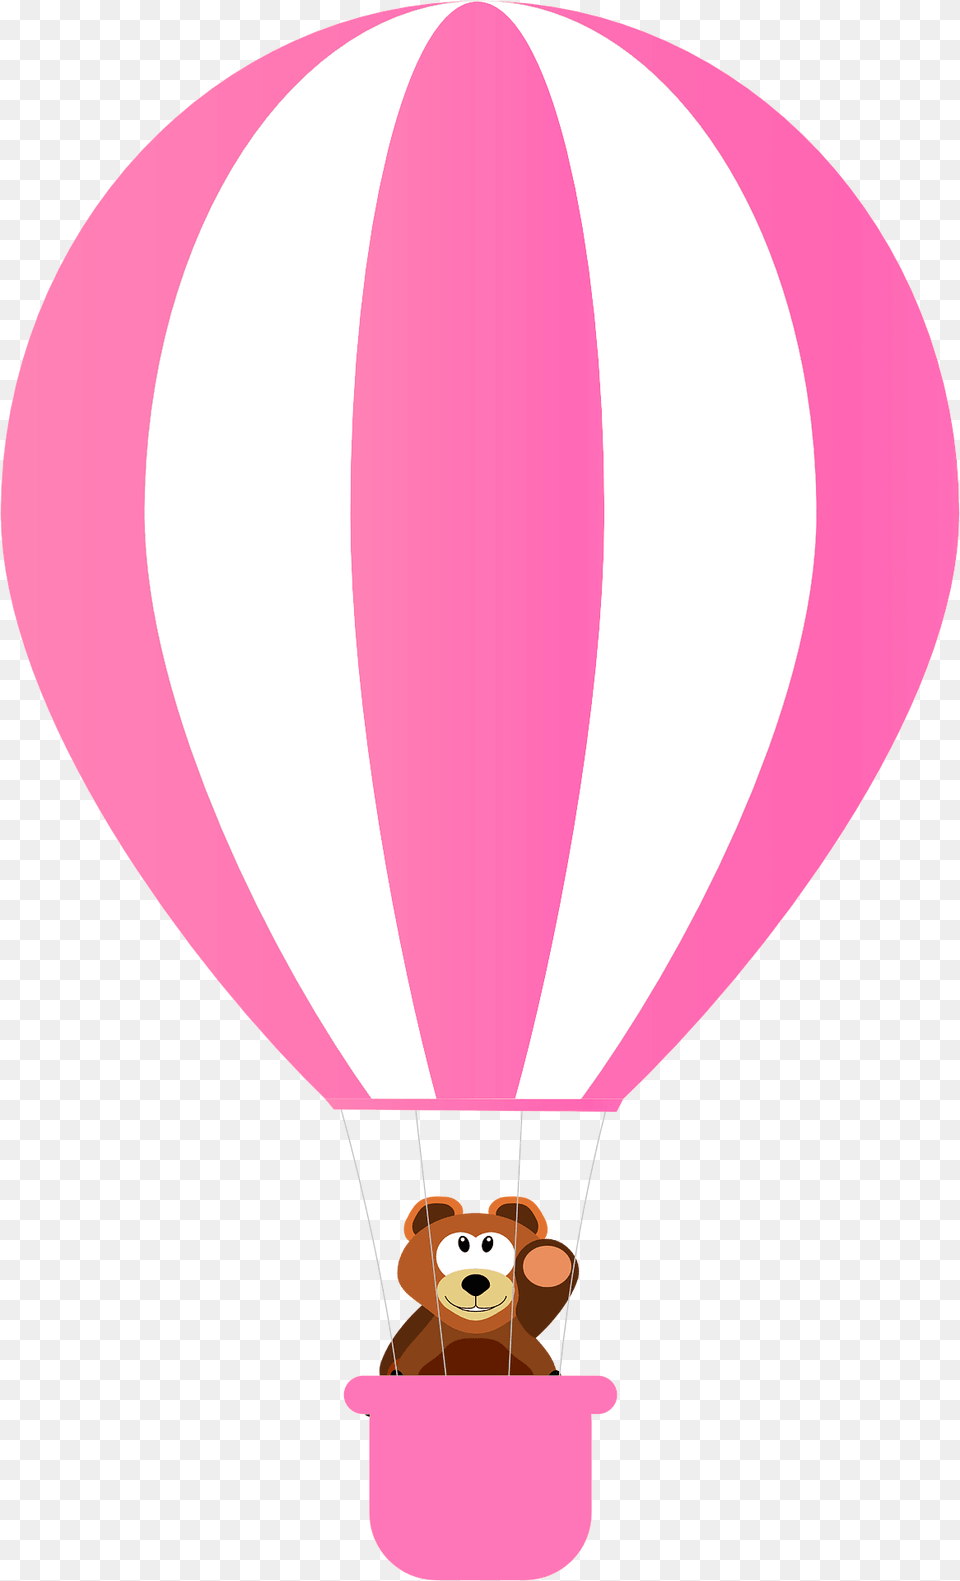 Bear On The Air Balloon Clipart, Aircraft, Transportation, Vehicle, Hot Air Balloon Png Image